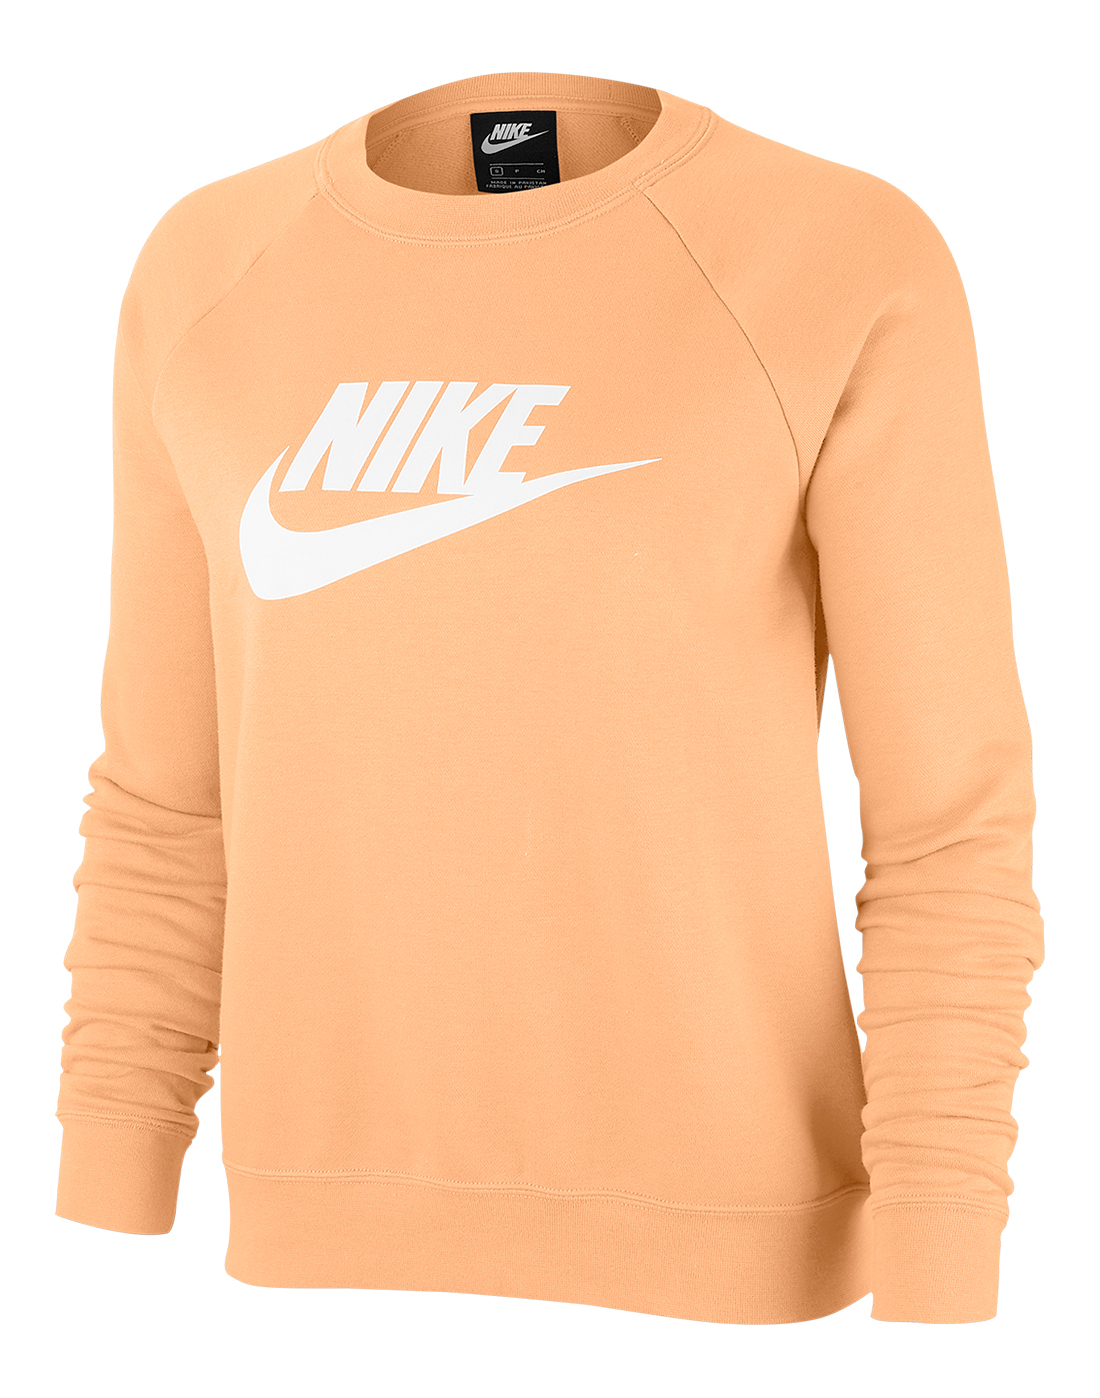 orange nike sweatshirt womens